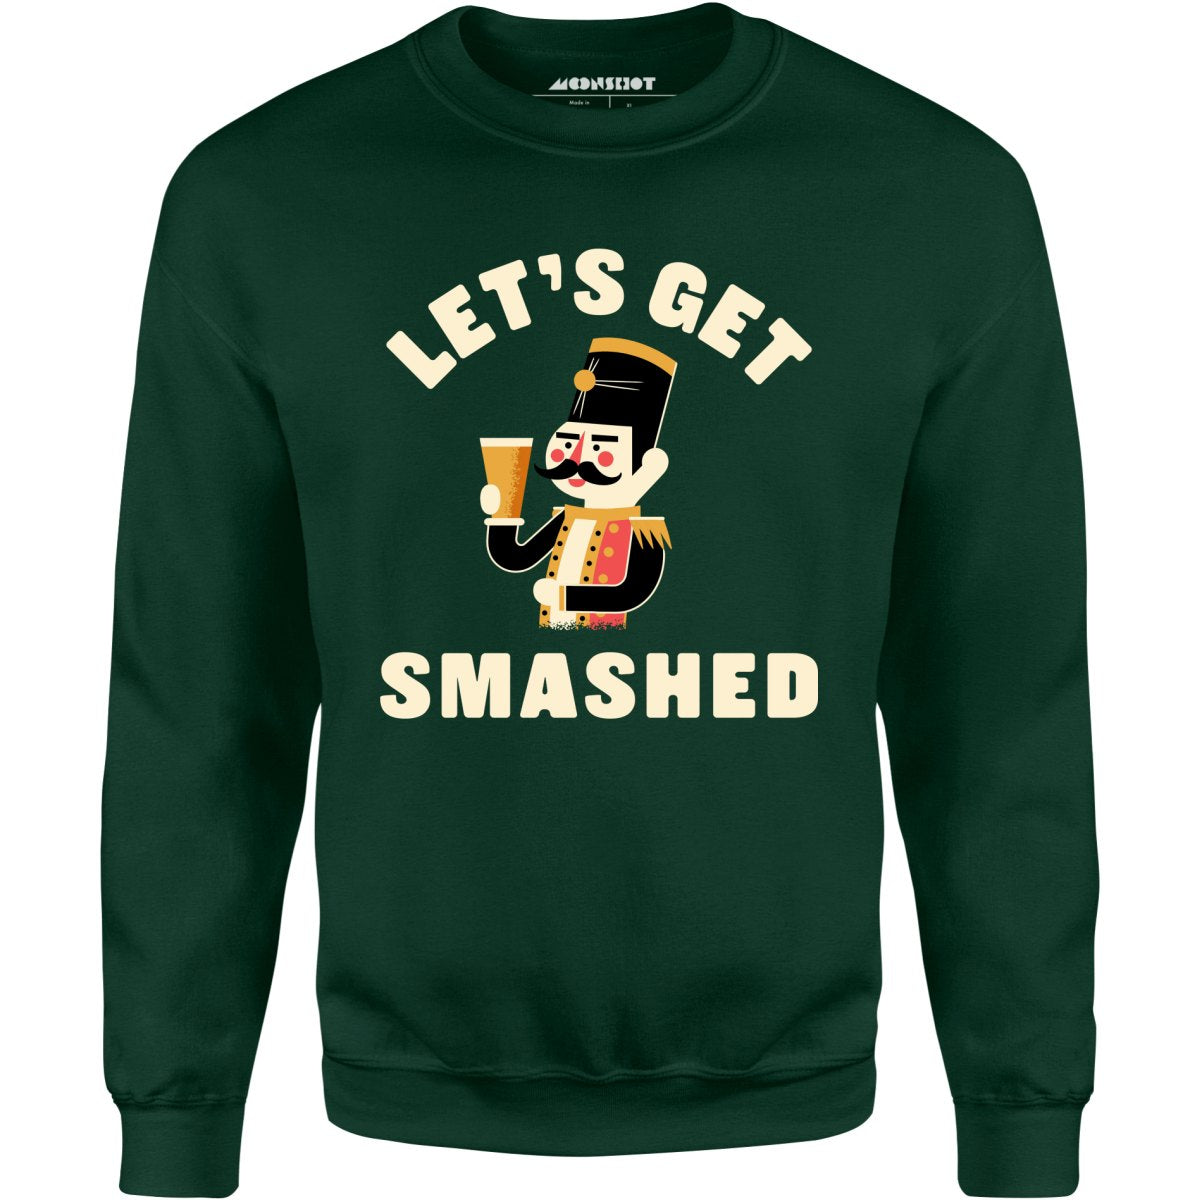 Let's Get Smashed - Unisex Sweatshirt